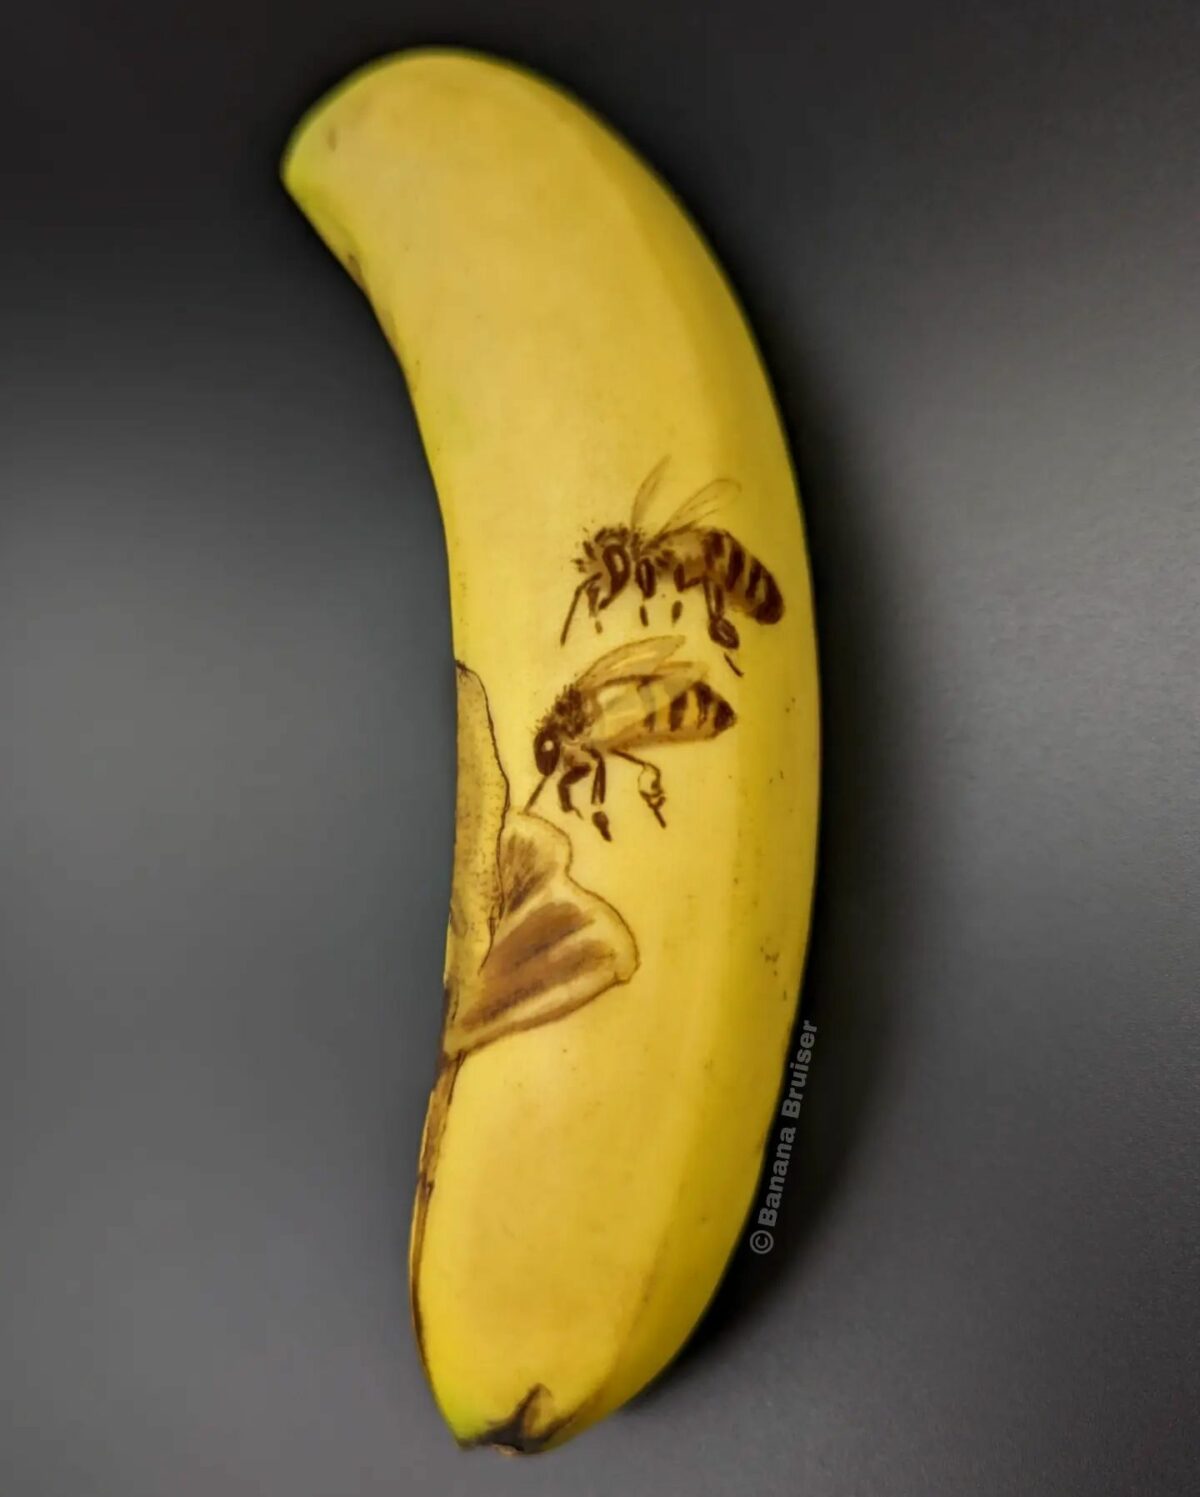 The Bruised Banana Art Of Anna Chojnicka 4